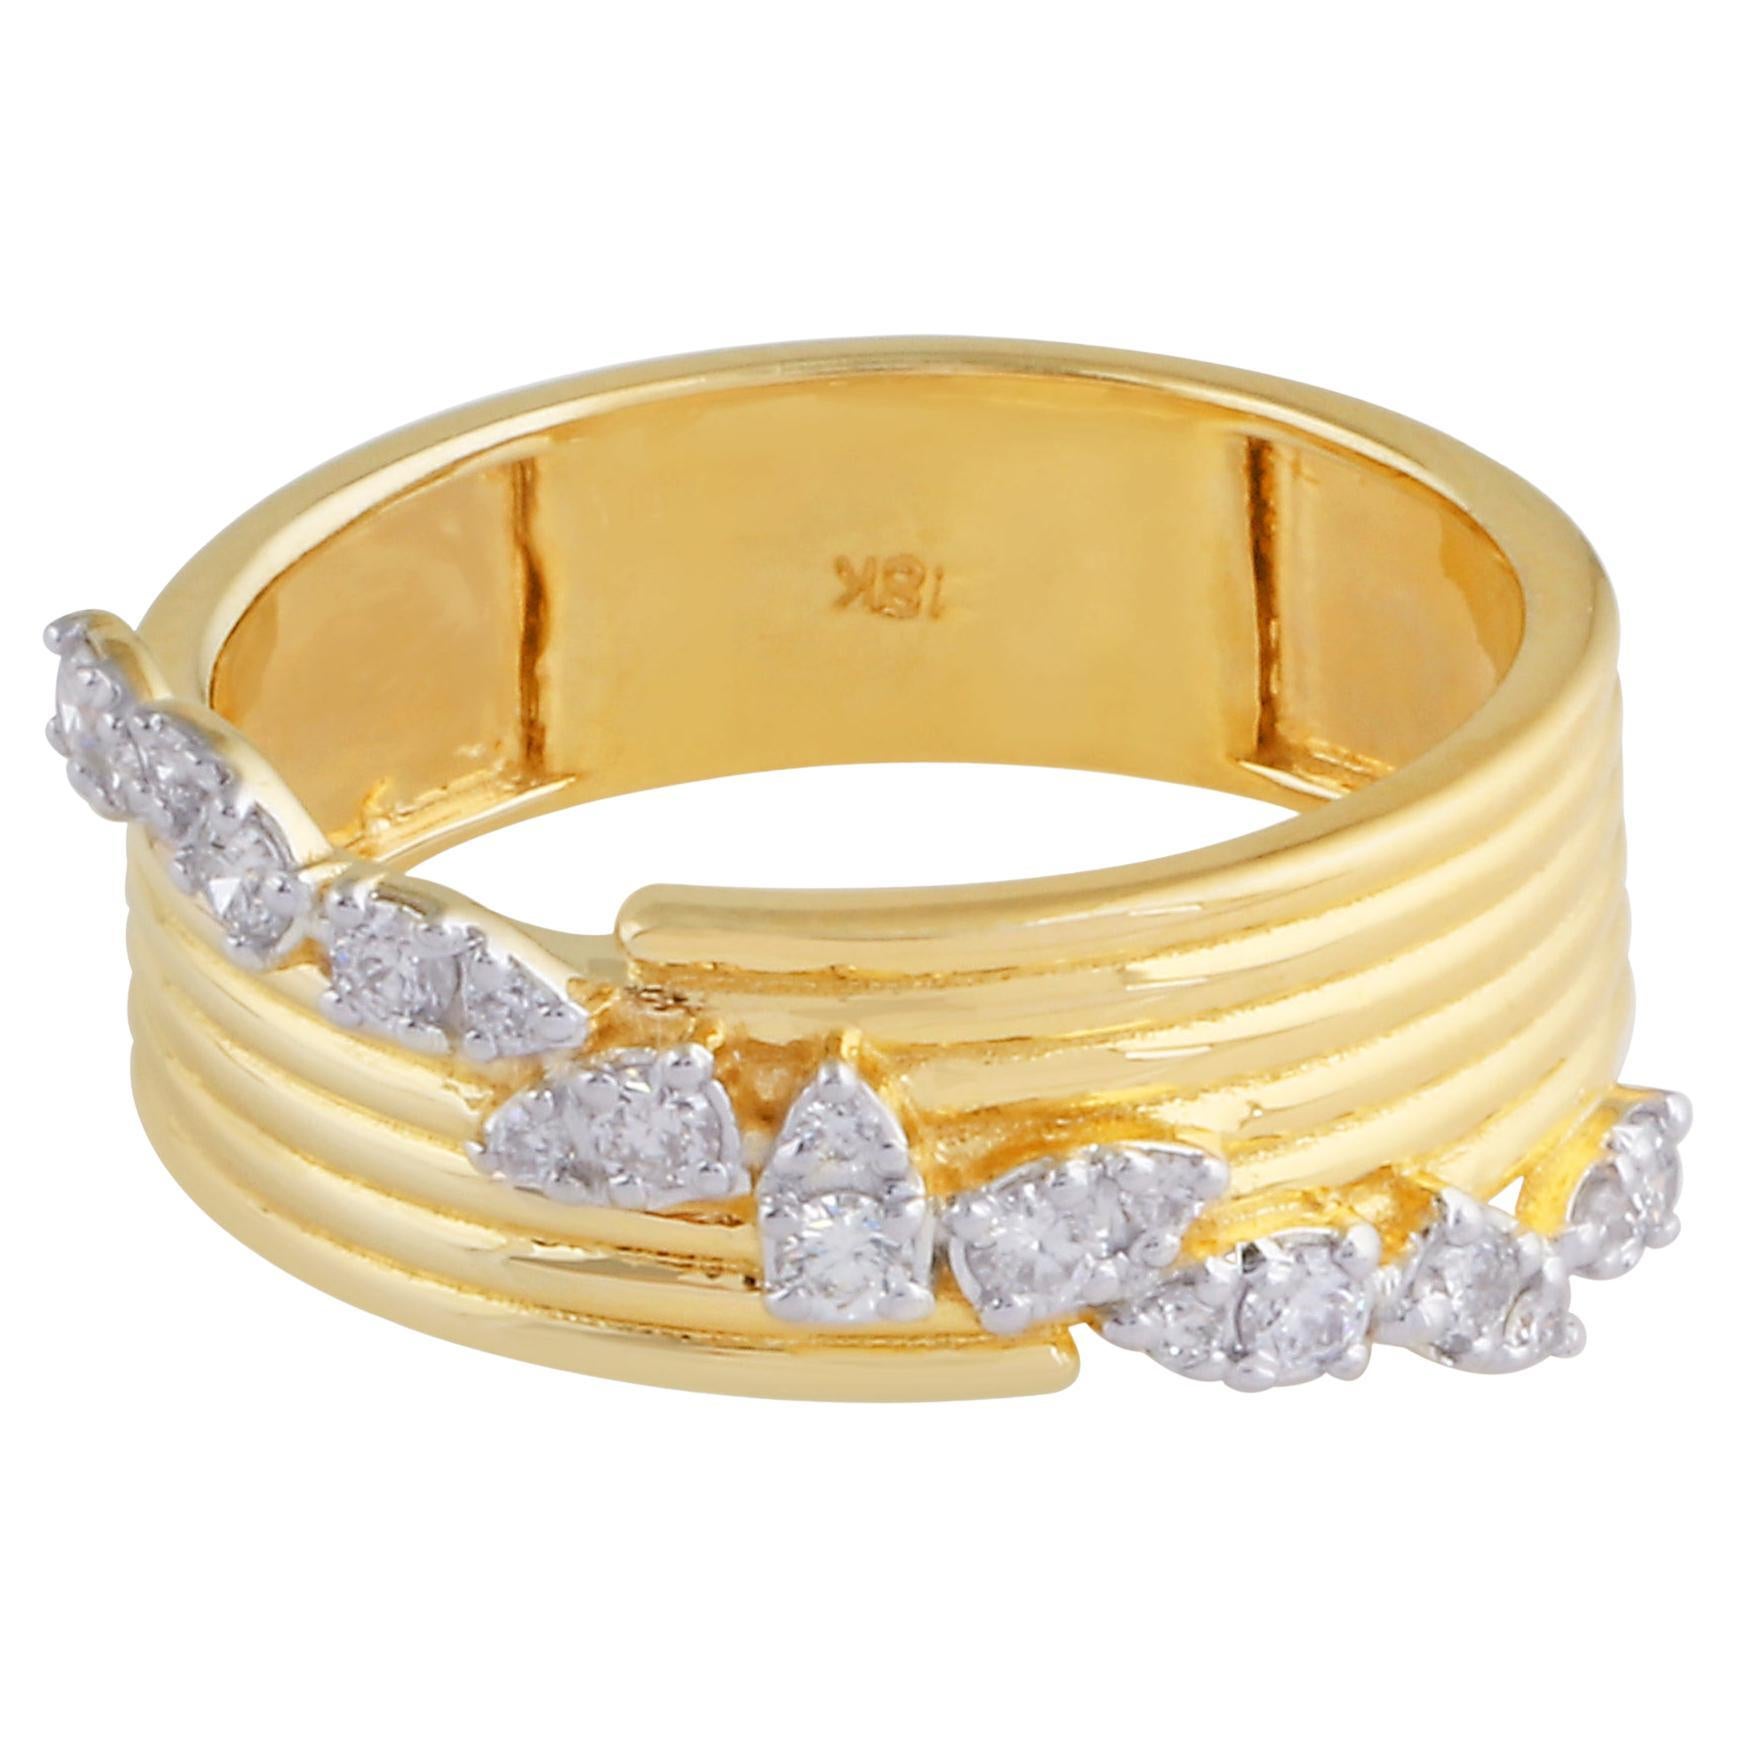 0.30 Carat SI Clarity HI Color Diamond Band Ring 18 Karat Yellow Gold Jewelry